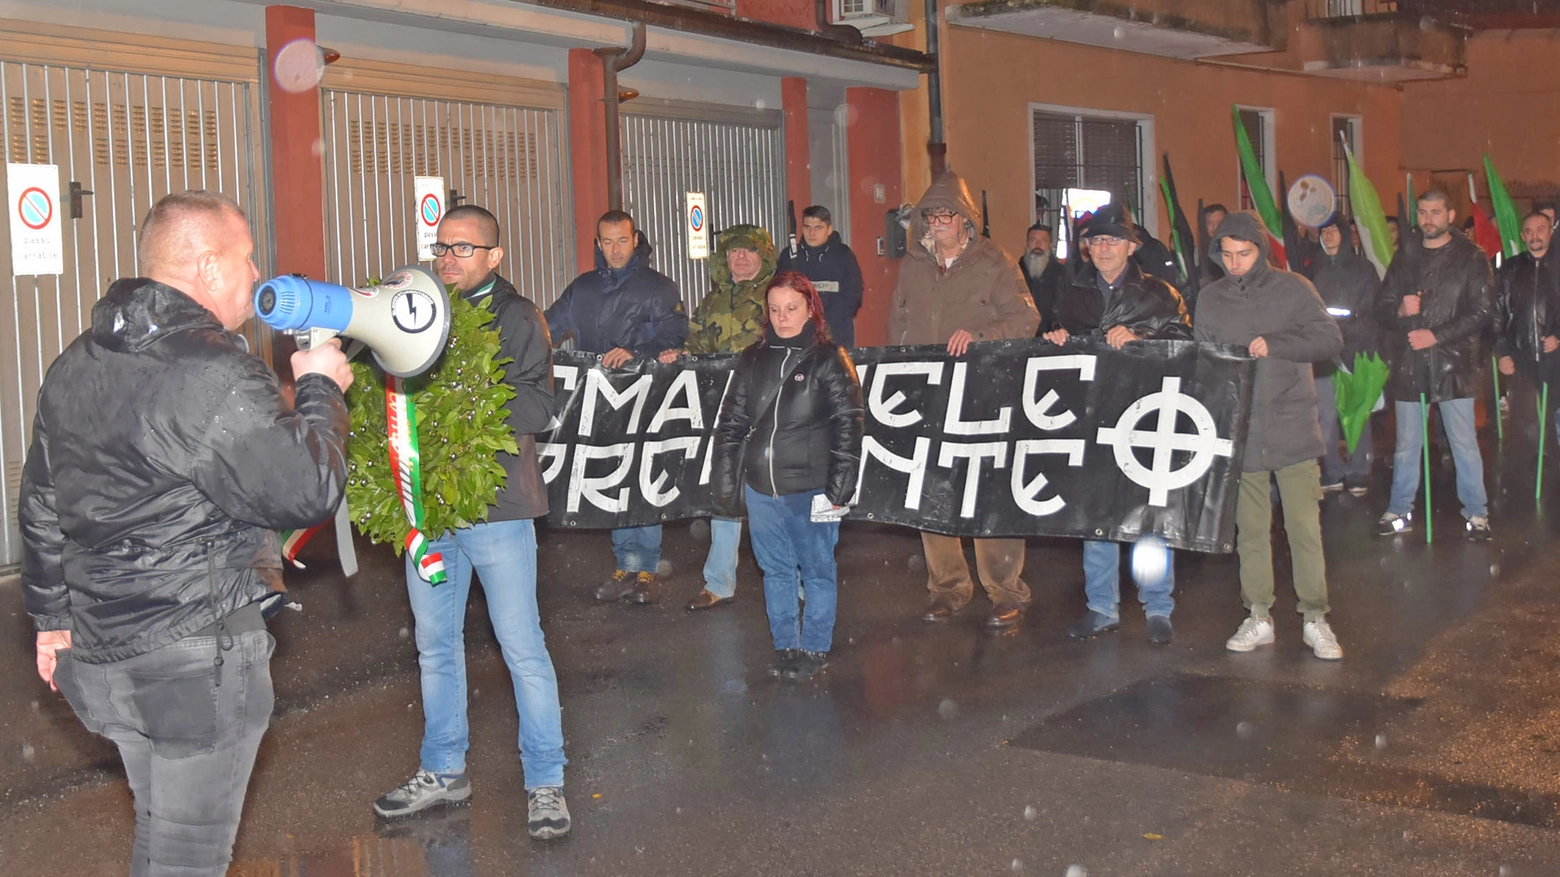 Manifestazione estrema destra a Pavia